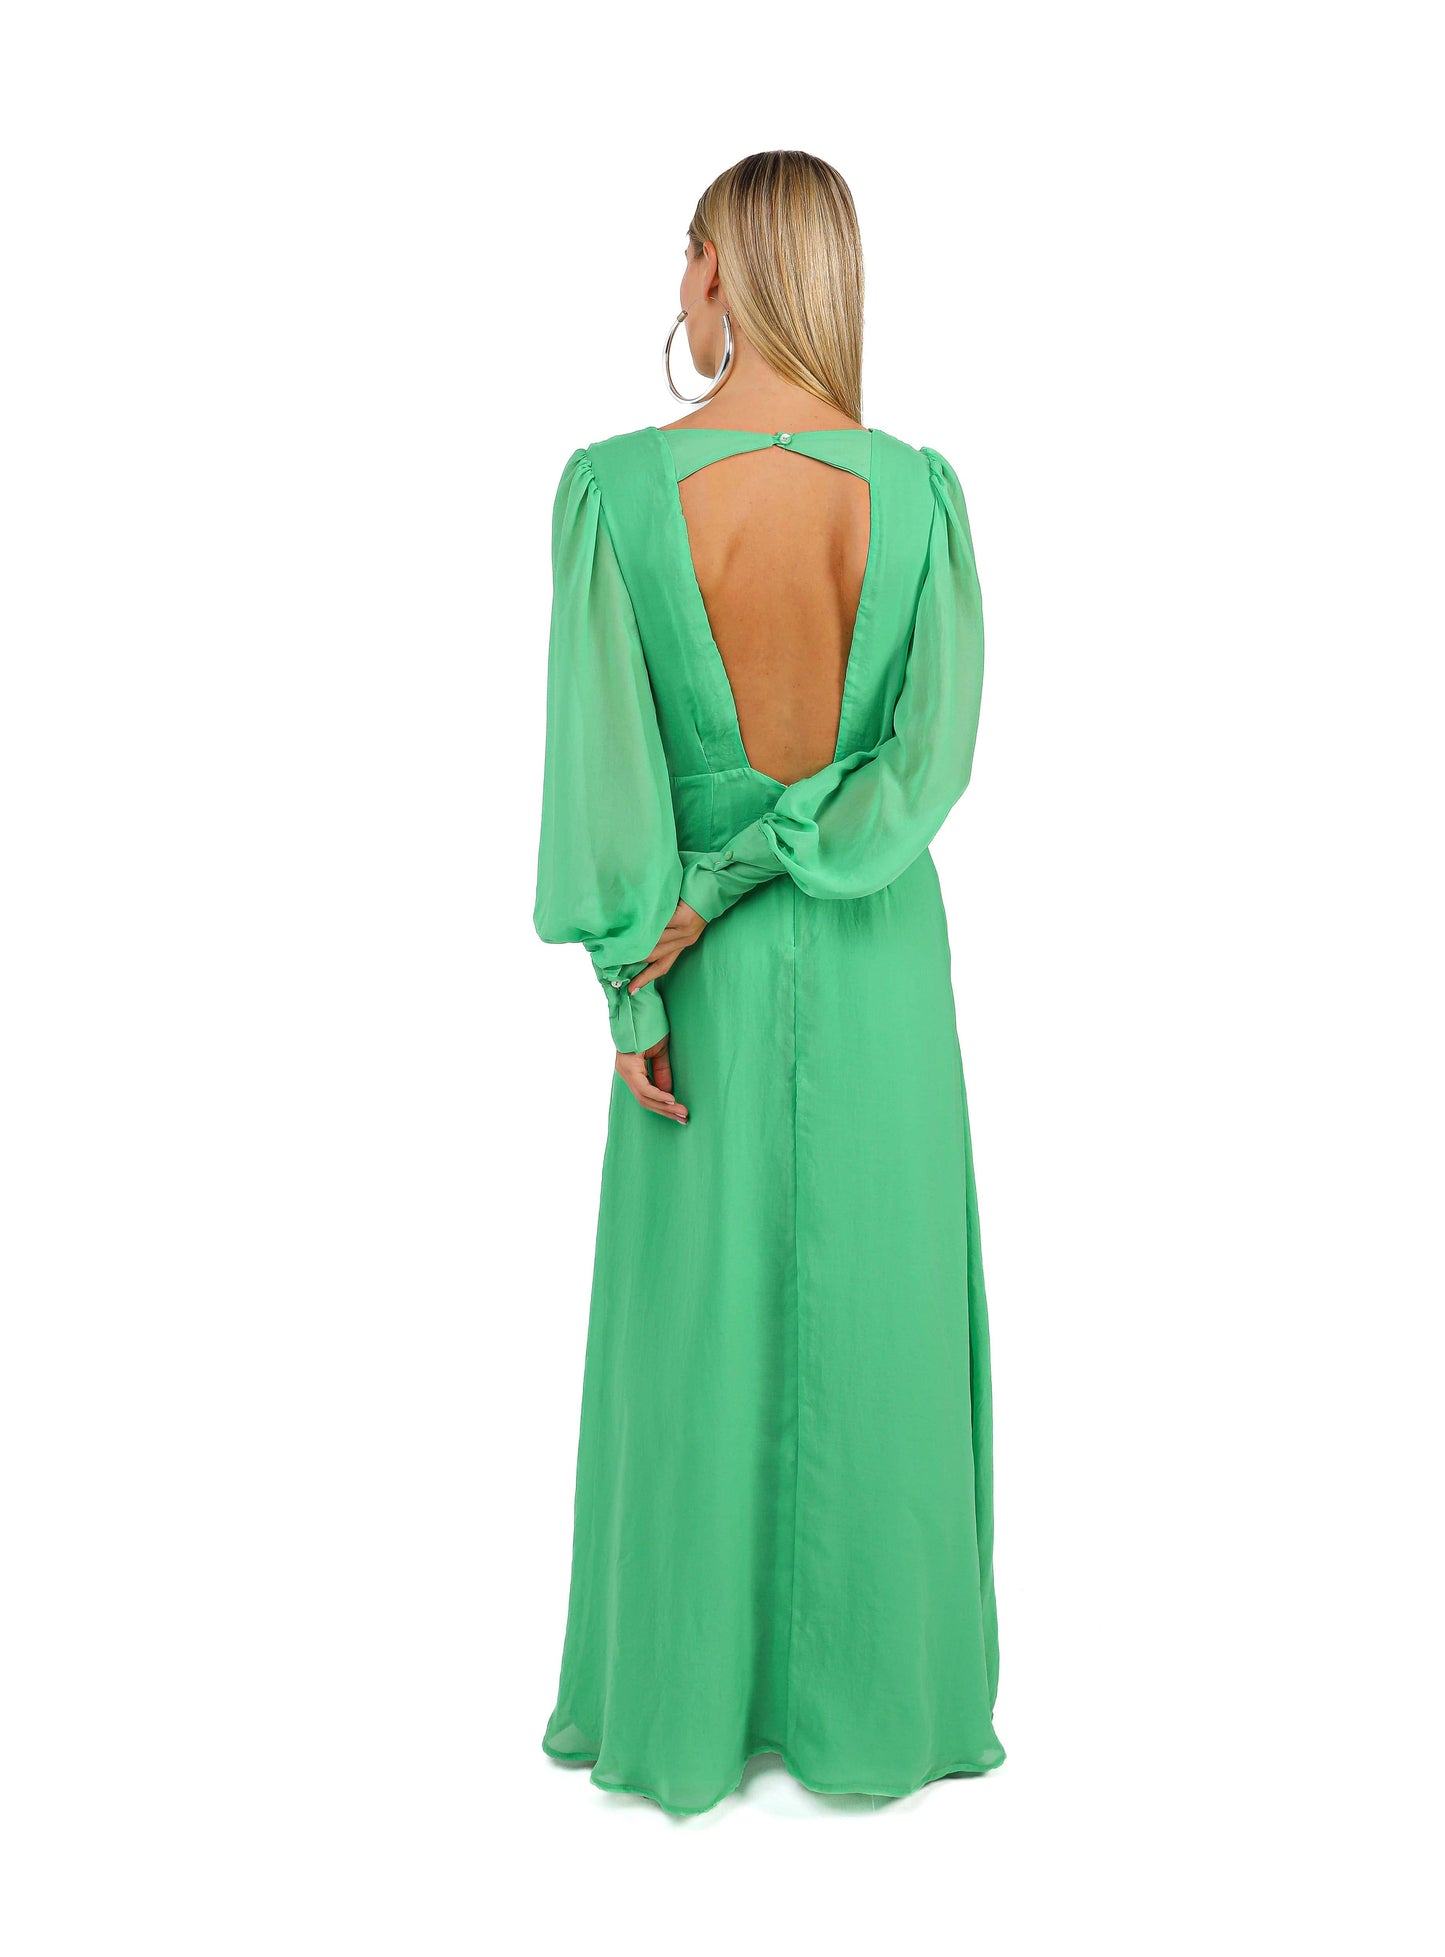 KARLA GREEN DRESS